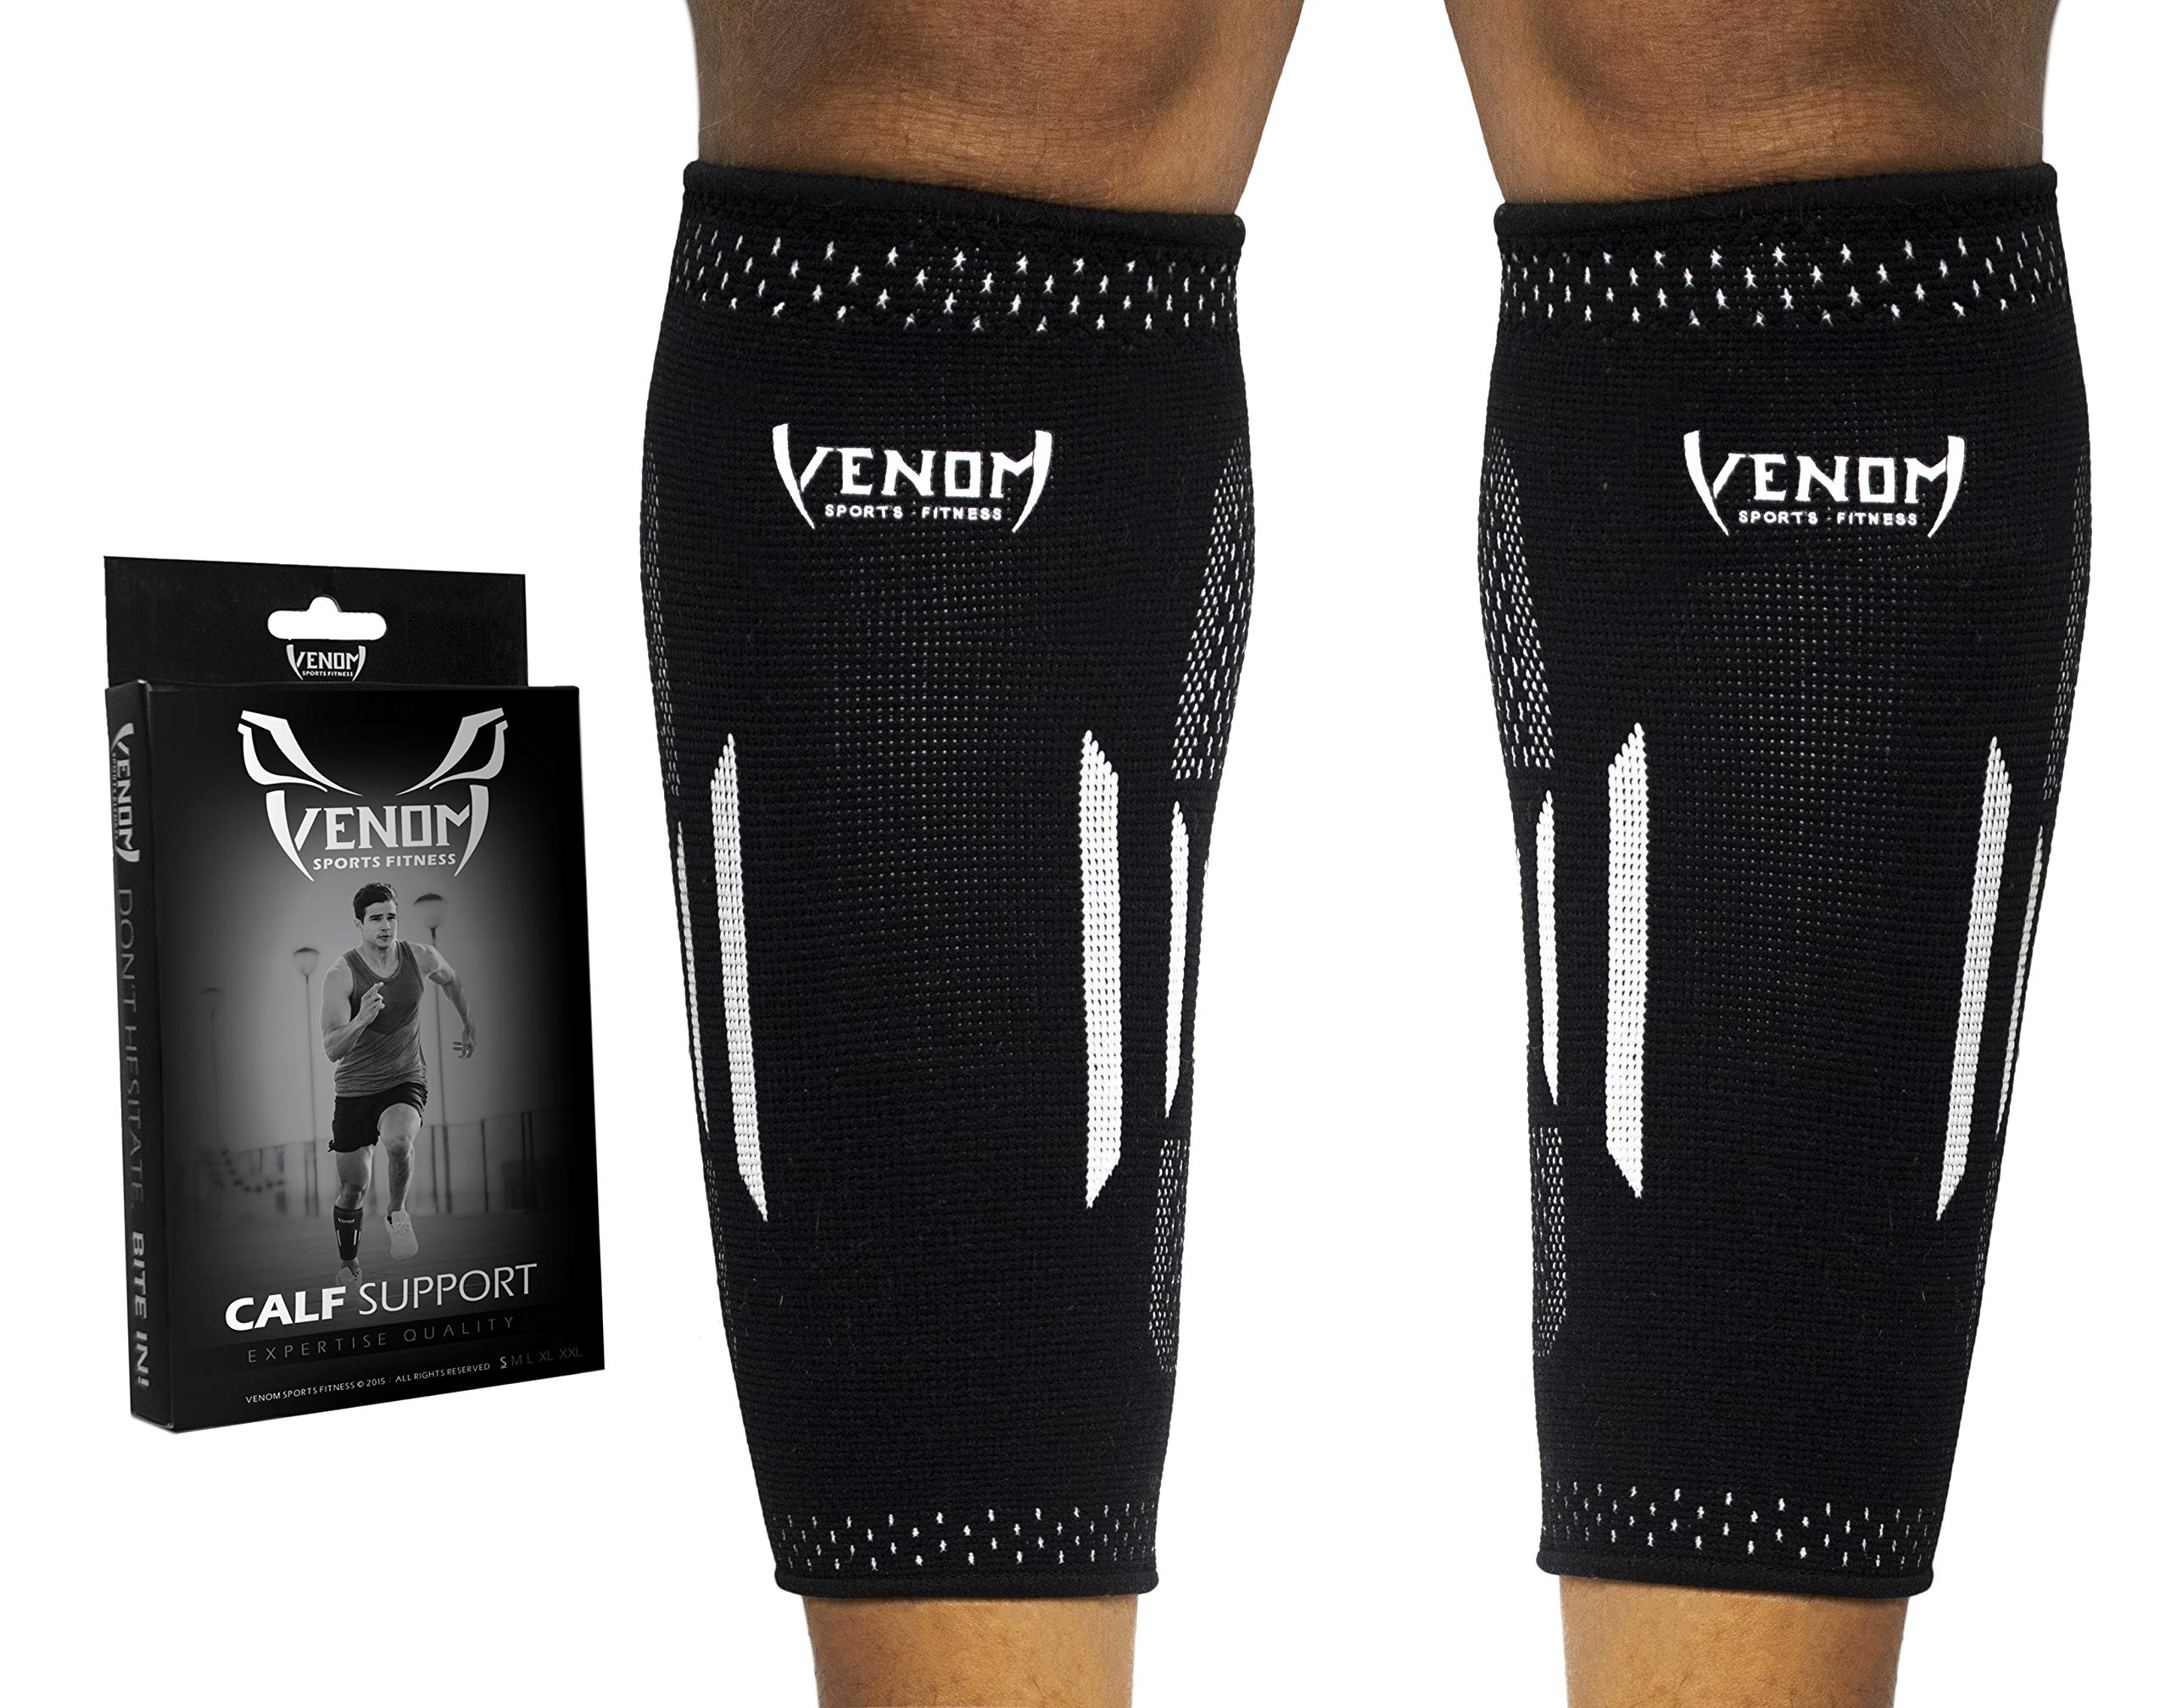 Book Cover Venom Calf Brace Compression Sleeves (Pair) - Elastic Support Socks for Pain Relief, Strain, Sprain, Shin Splints, Muscle Tear, Cramps, Running, Basketball, Football, Soccer, Men, Women